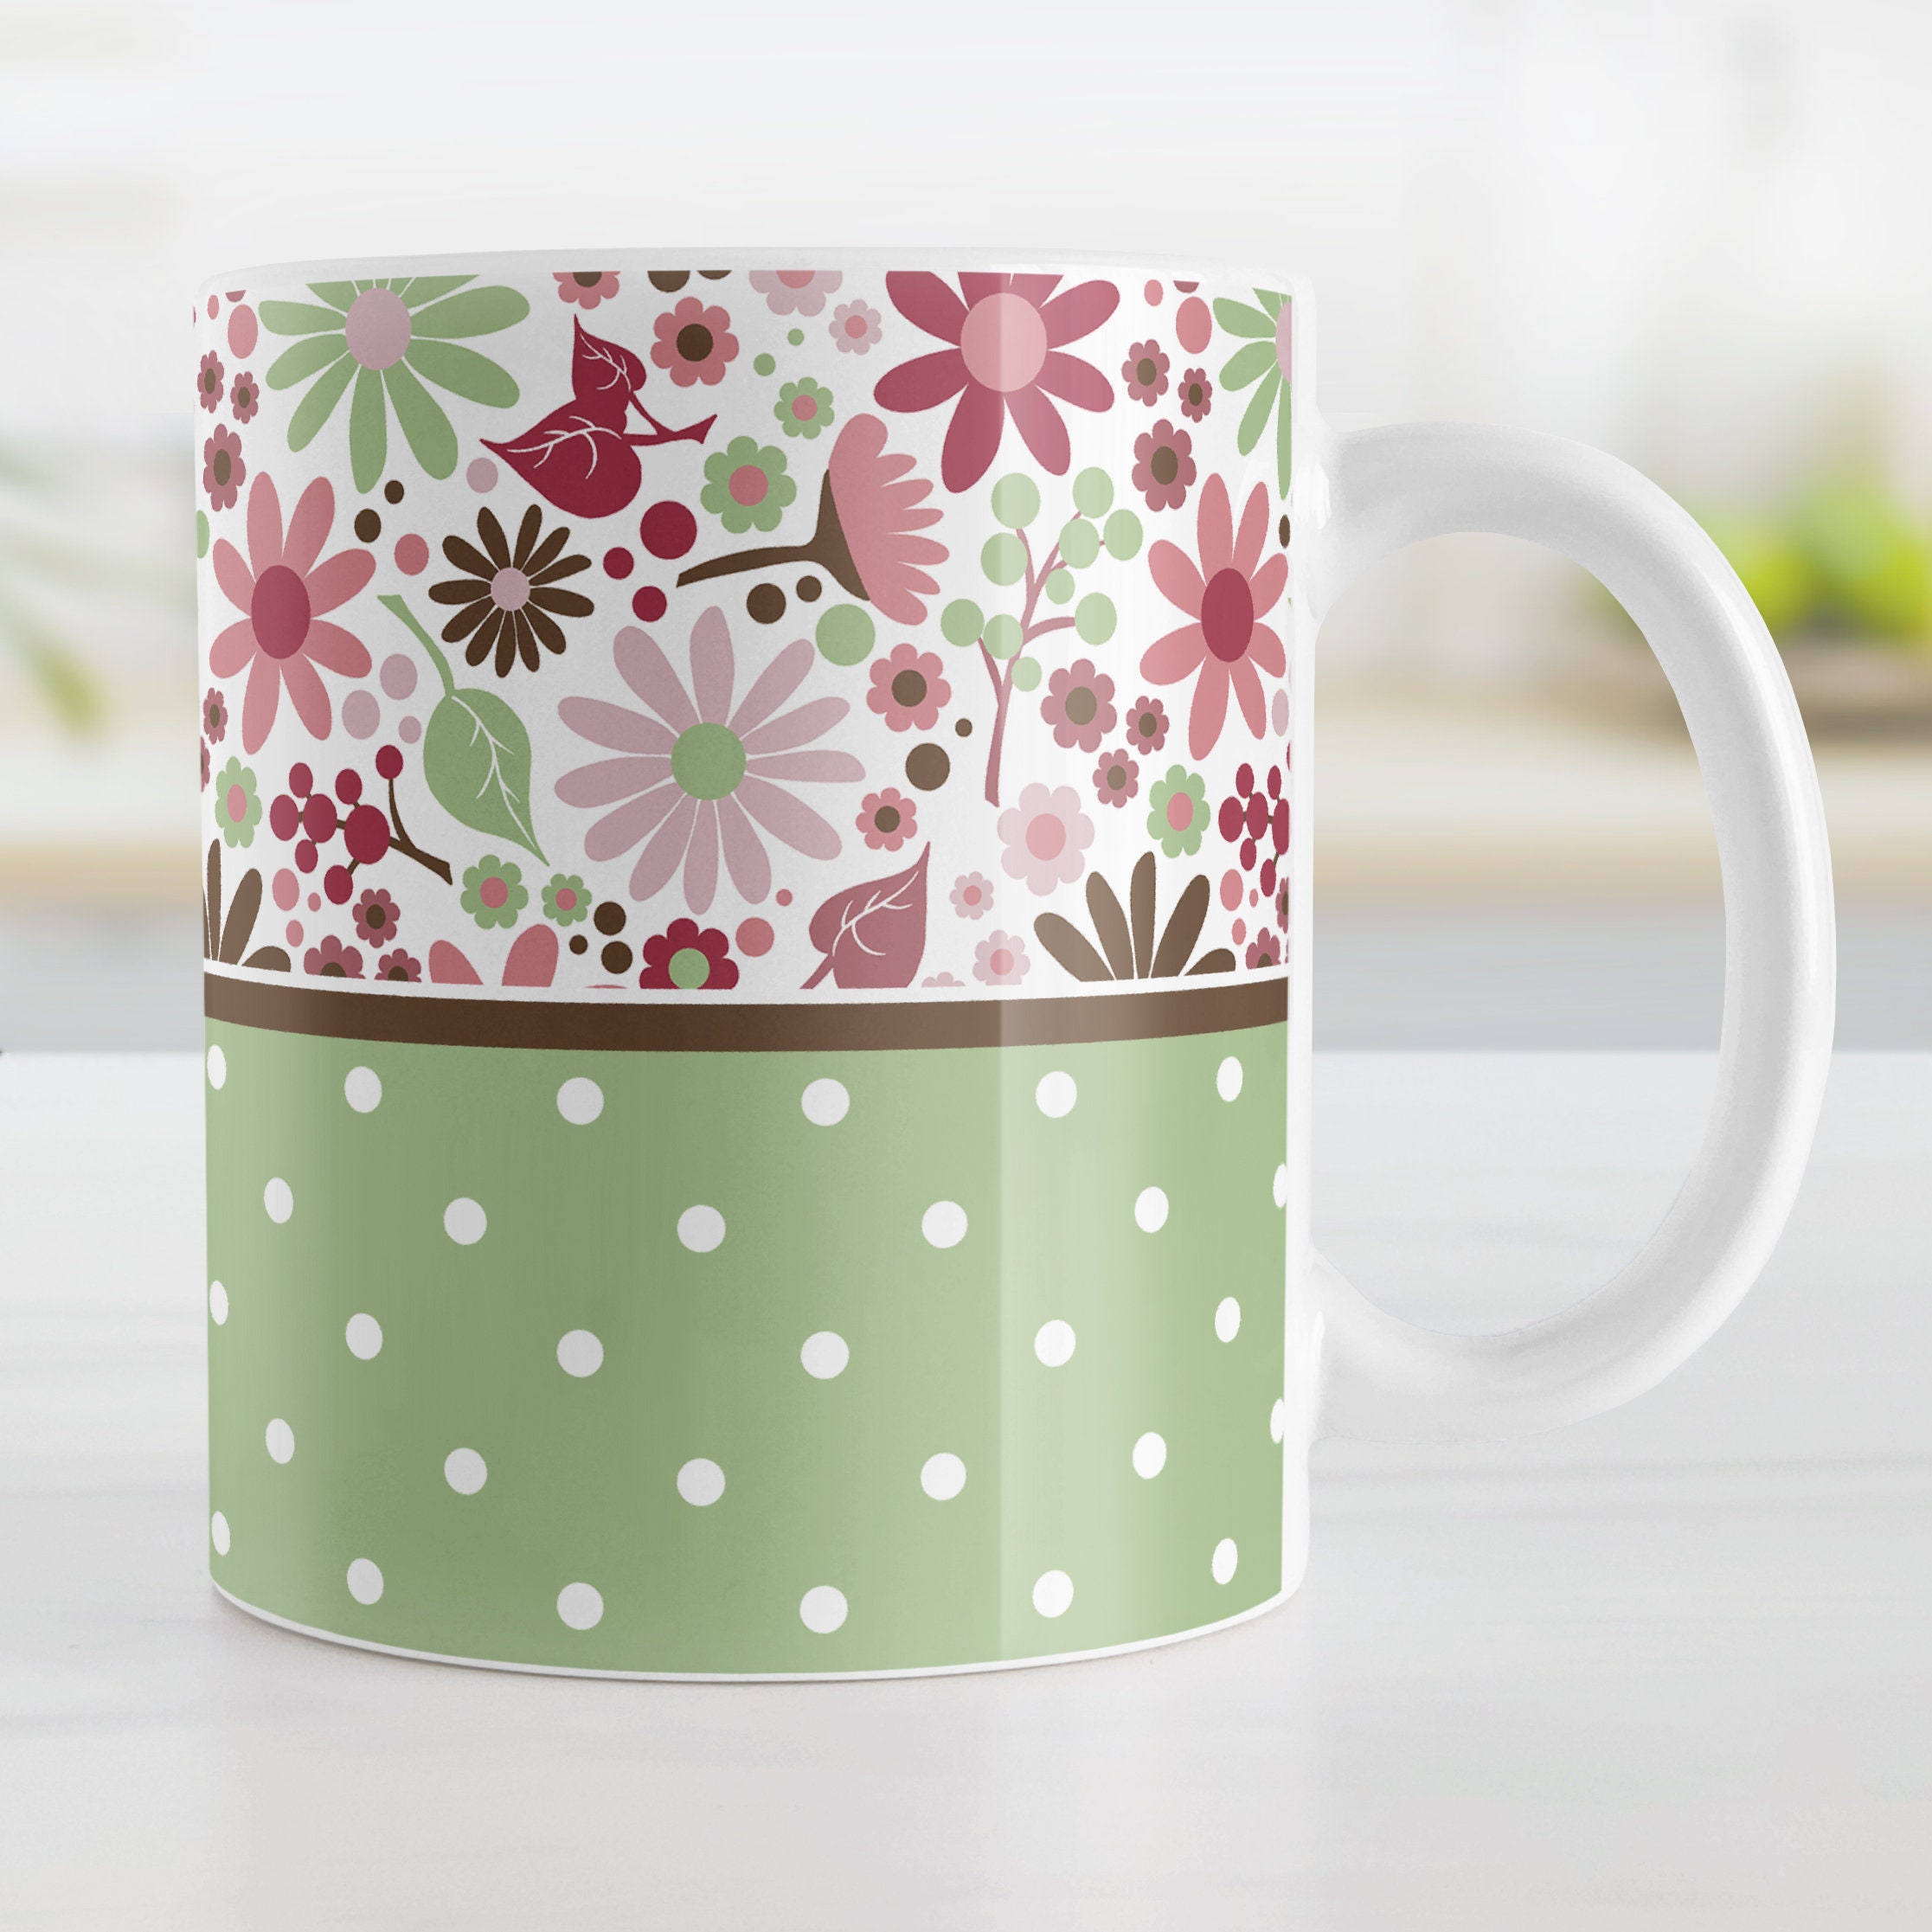 Berry Summer Flowers Travel Mug, pretty floral pattern, berry pink aqua  blue brown - 15oz stainless steel travel mug